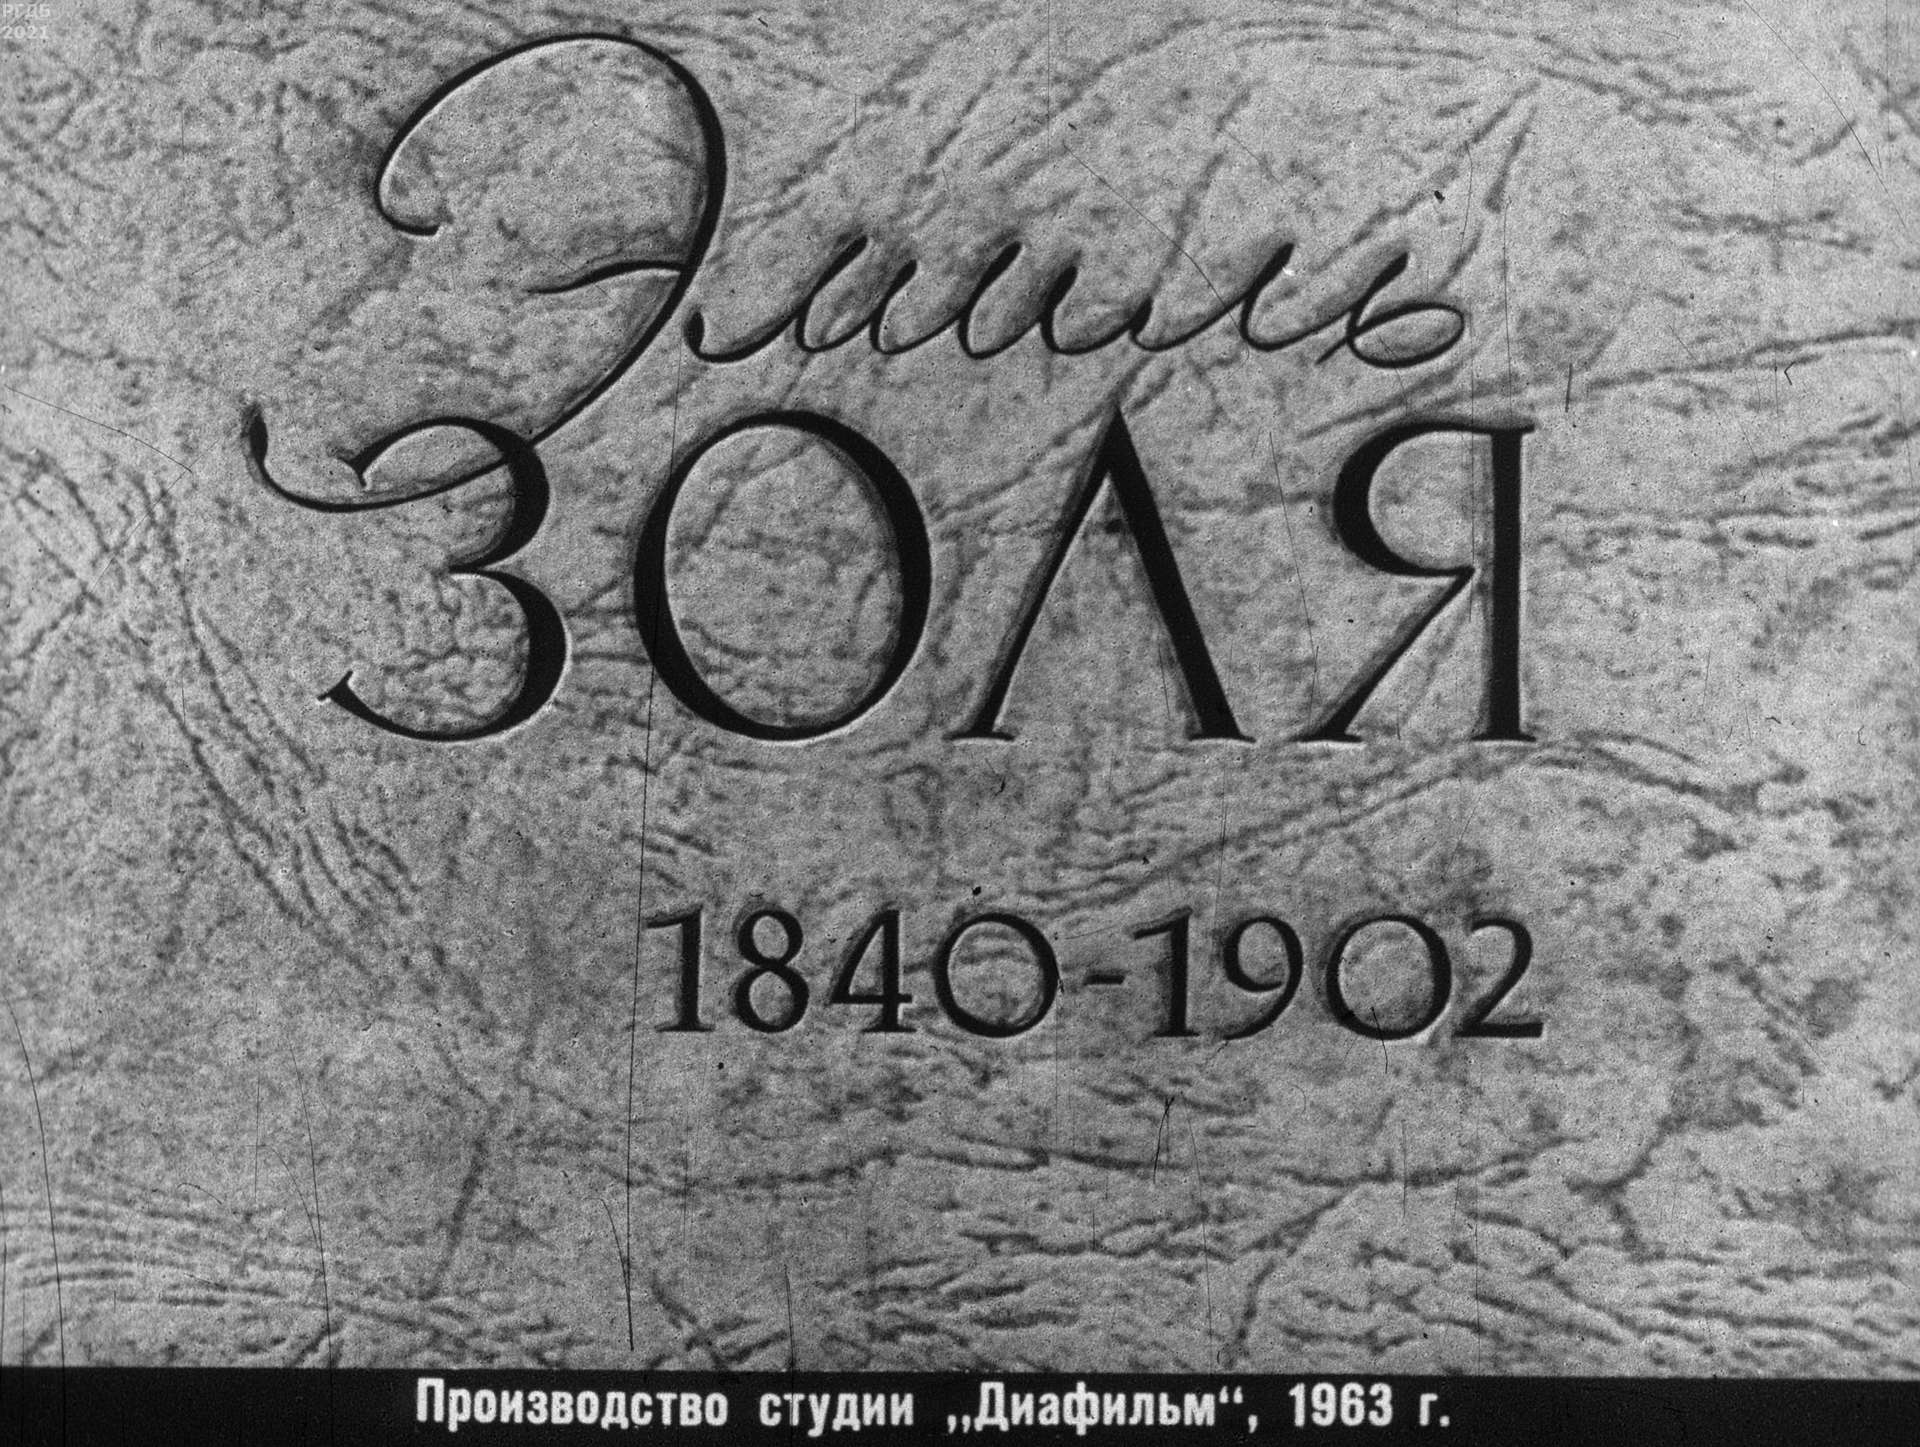 Эмиль Золя. 1840-1902